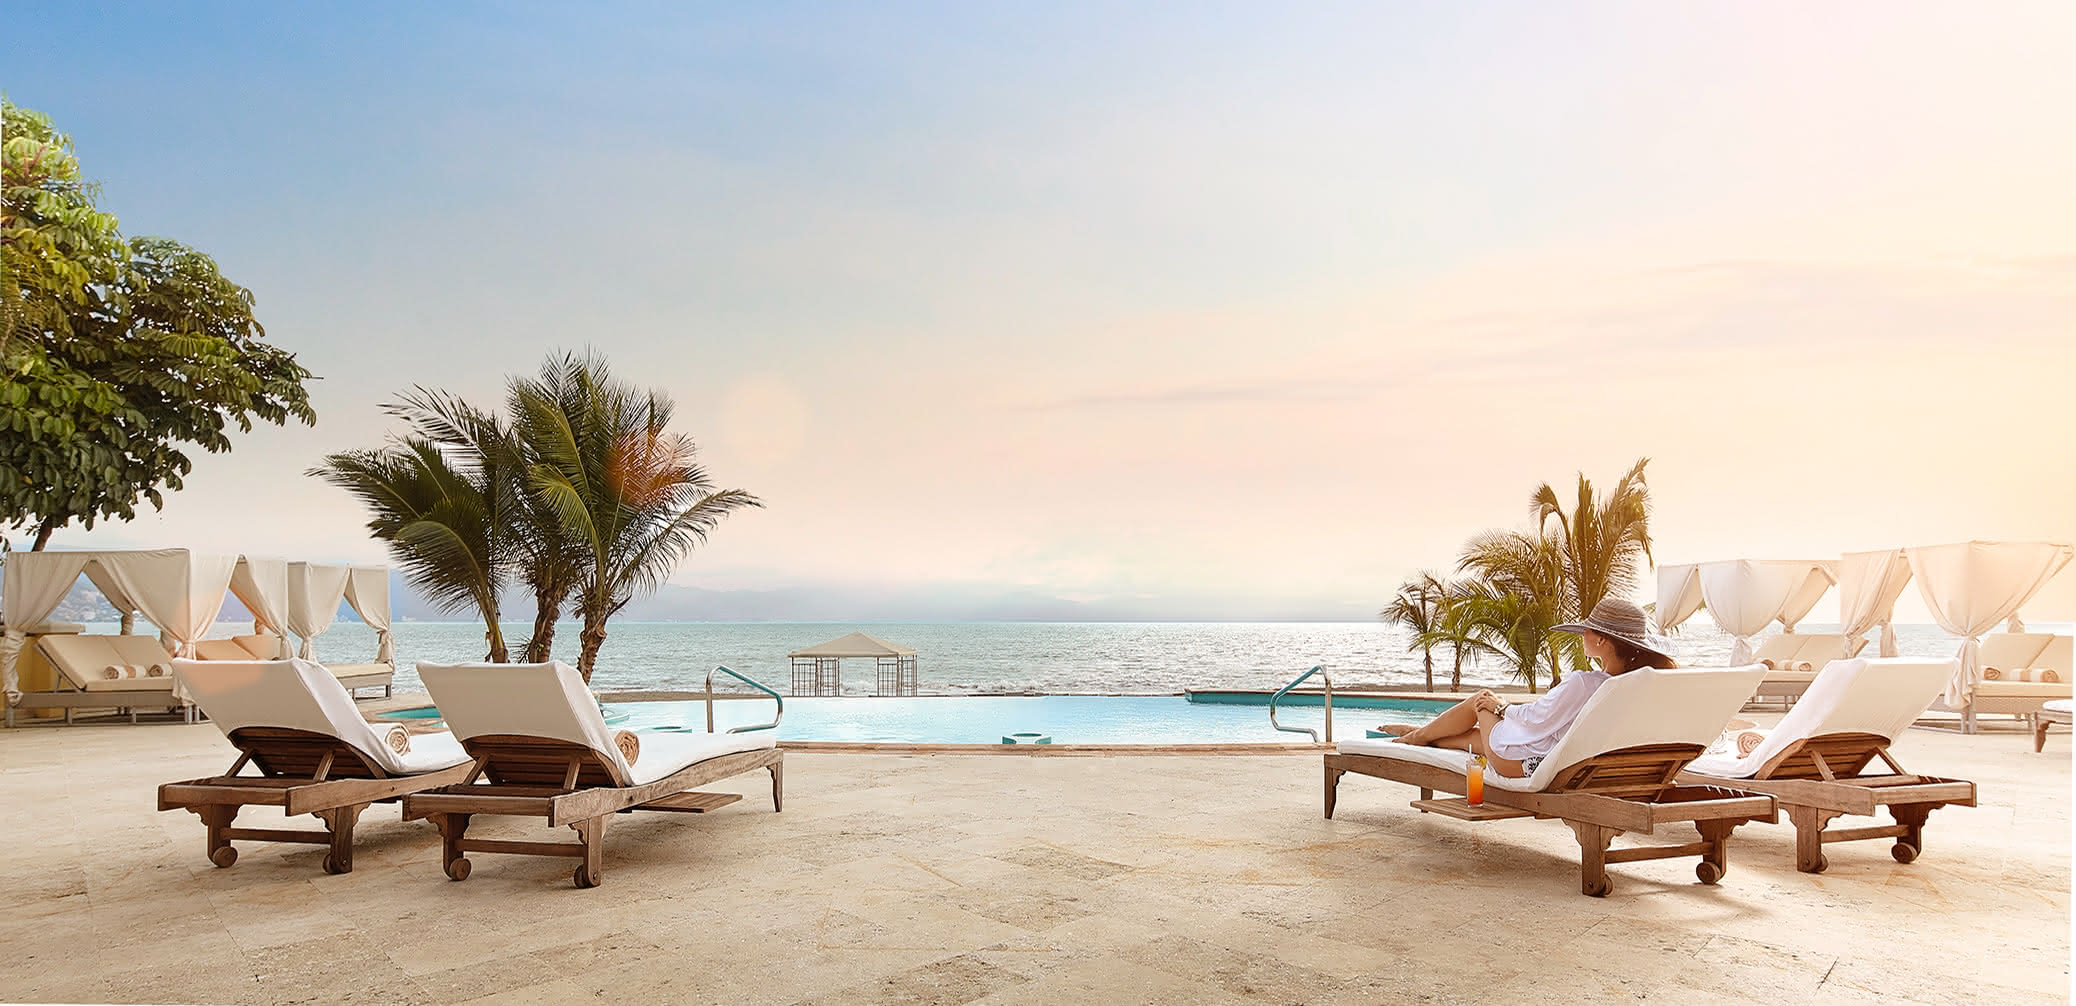 Bid On 2 Luxury All-Inclusive Nights on Mexico's Pacific Riviera